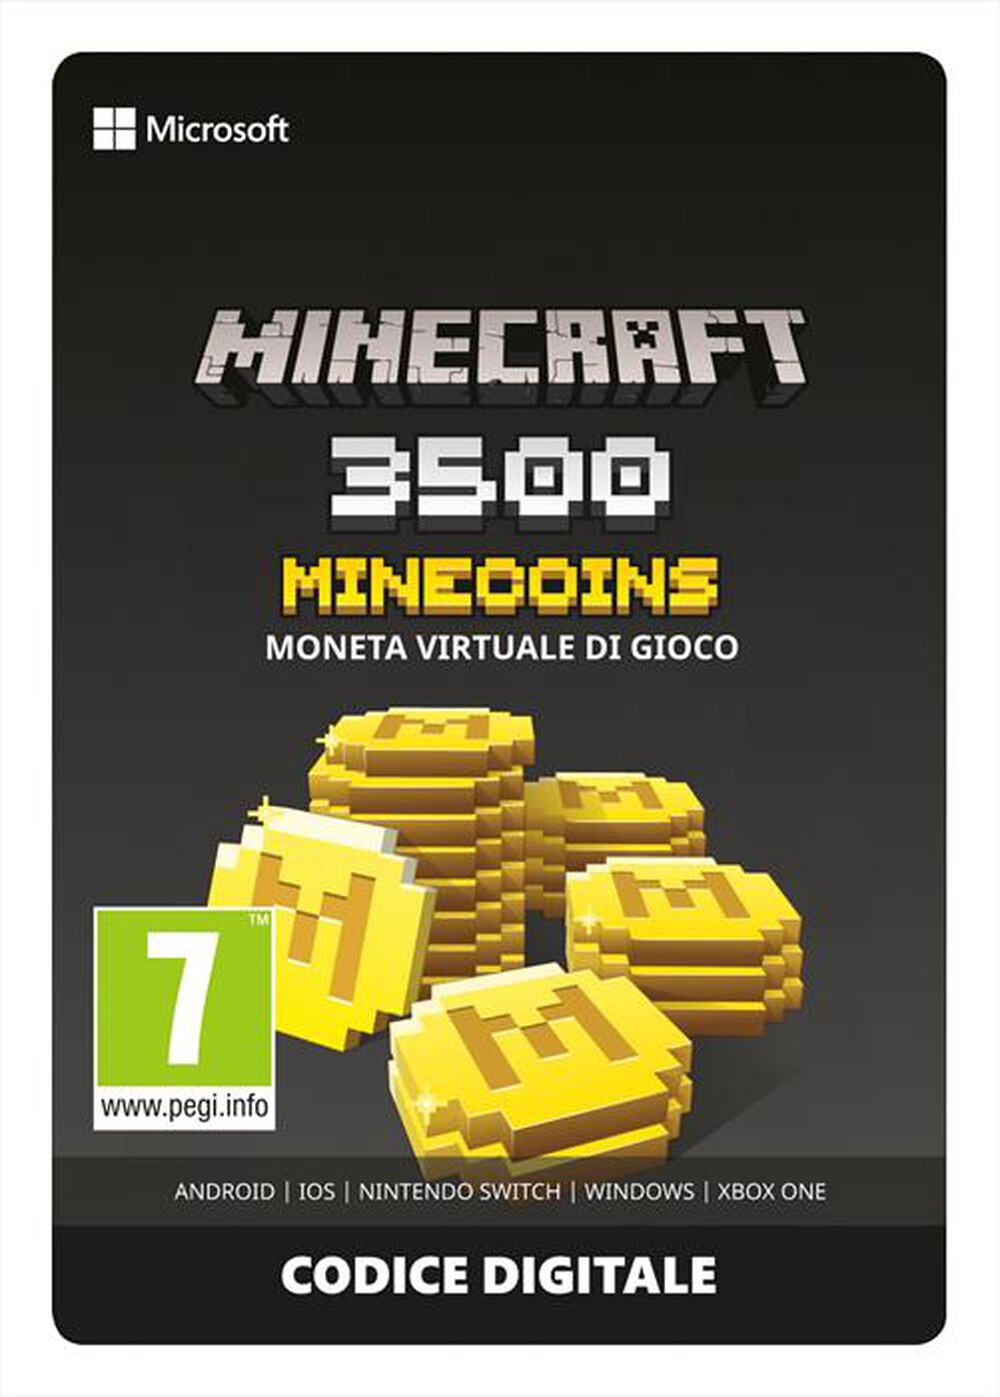 "MICROSOFT - Minecraft 3500 MineCoins - ESD"